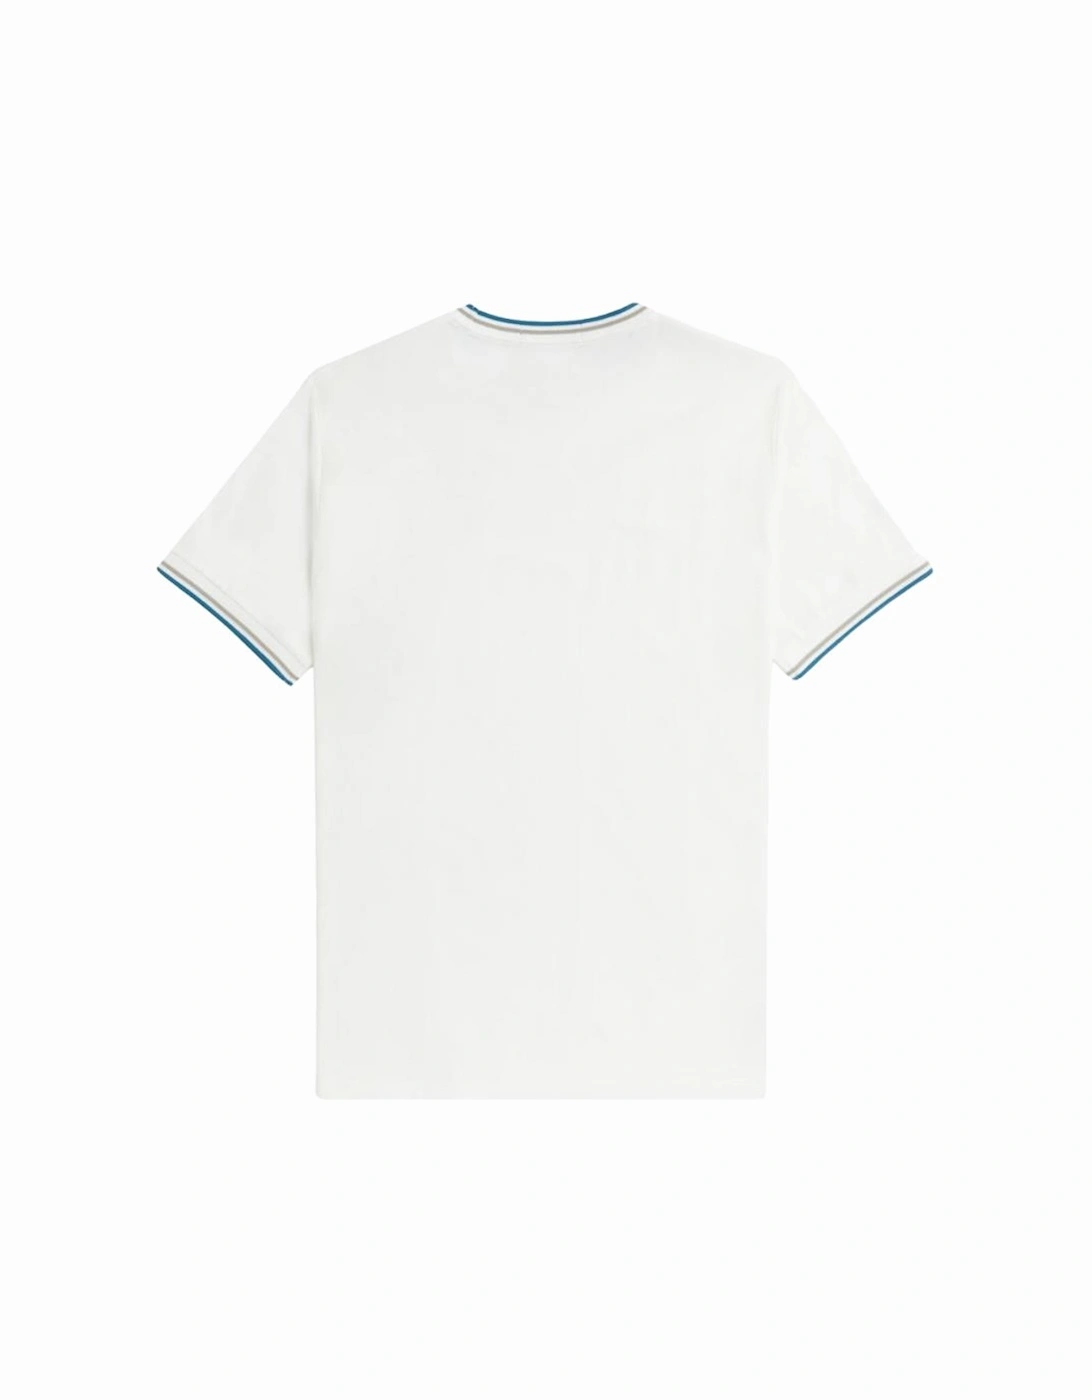 Twin Tipped T-Shirt - White/Grey/Ocean